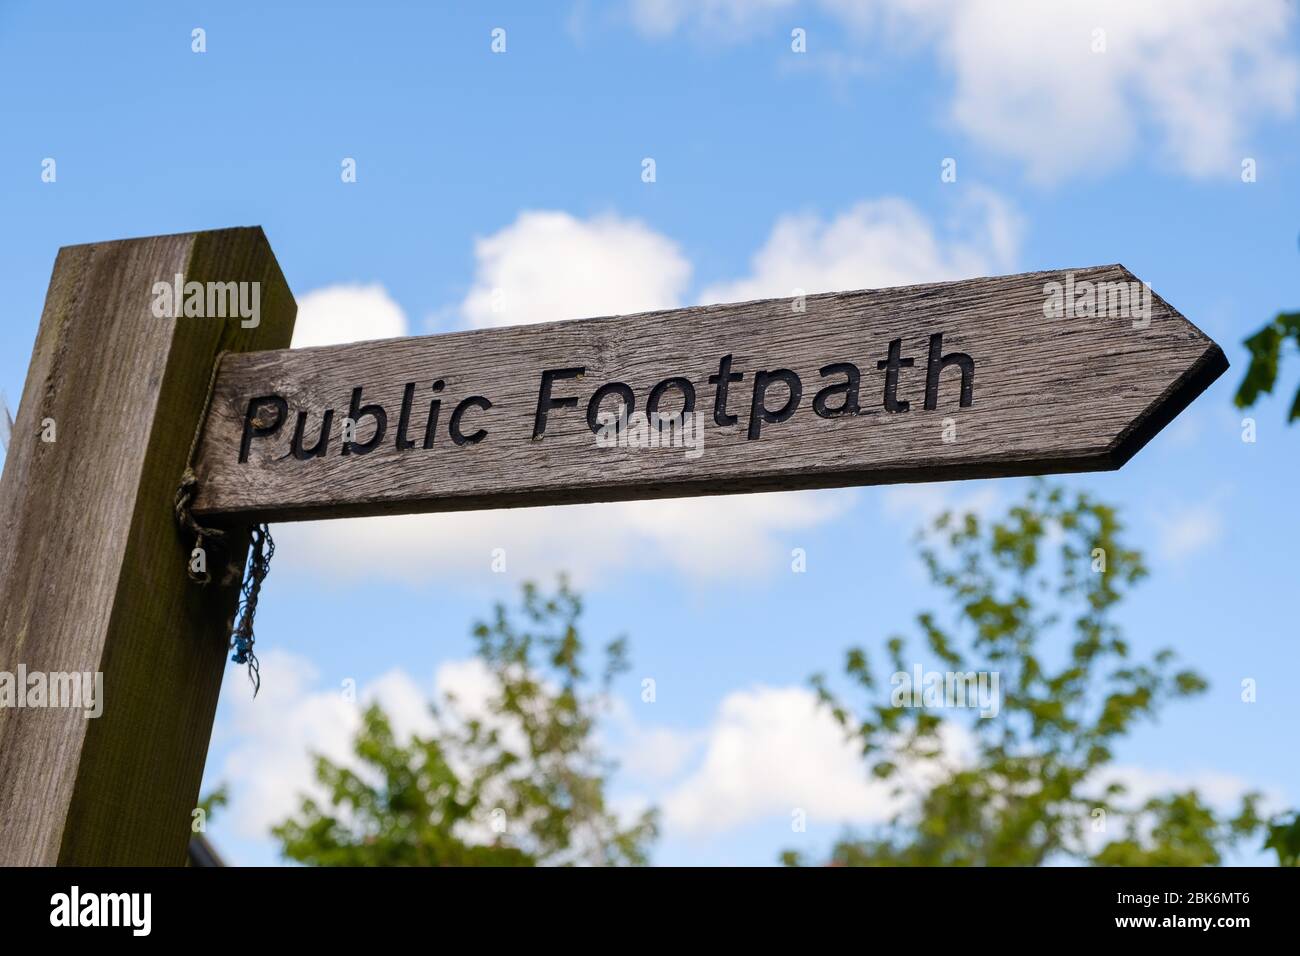 Public footpath signpost, Wonersh, Surrey Stock Photo